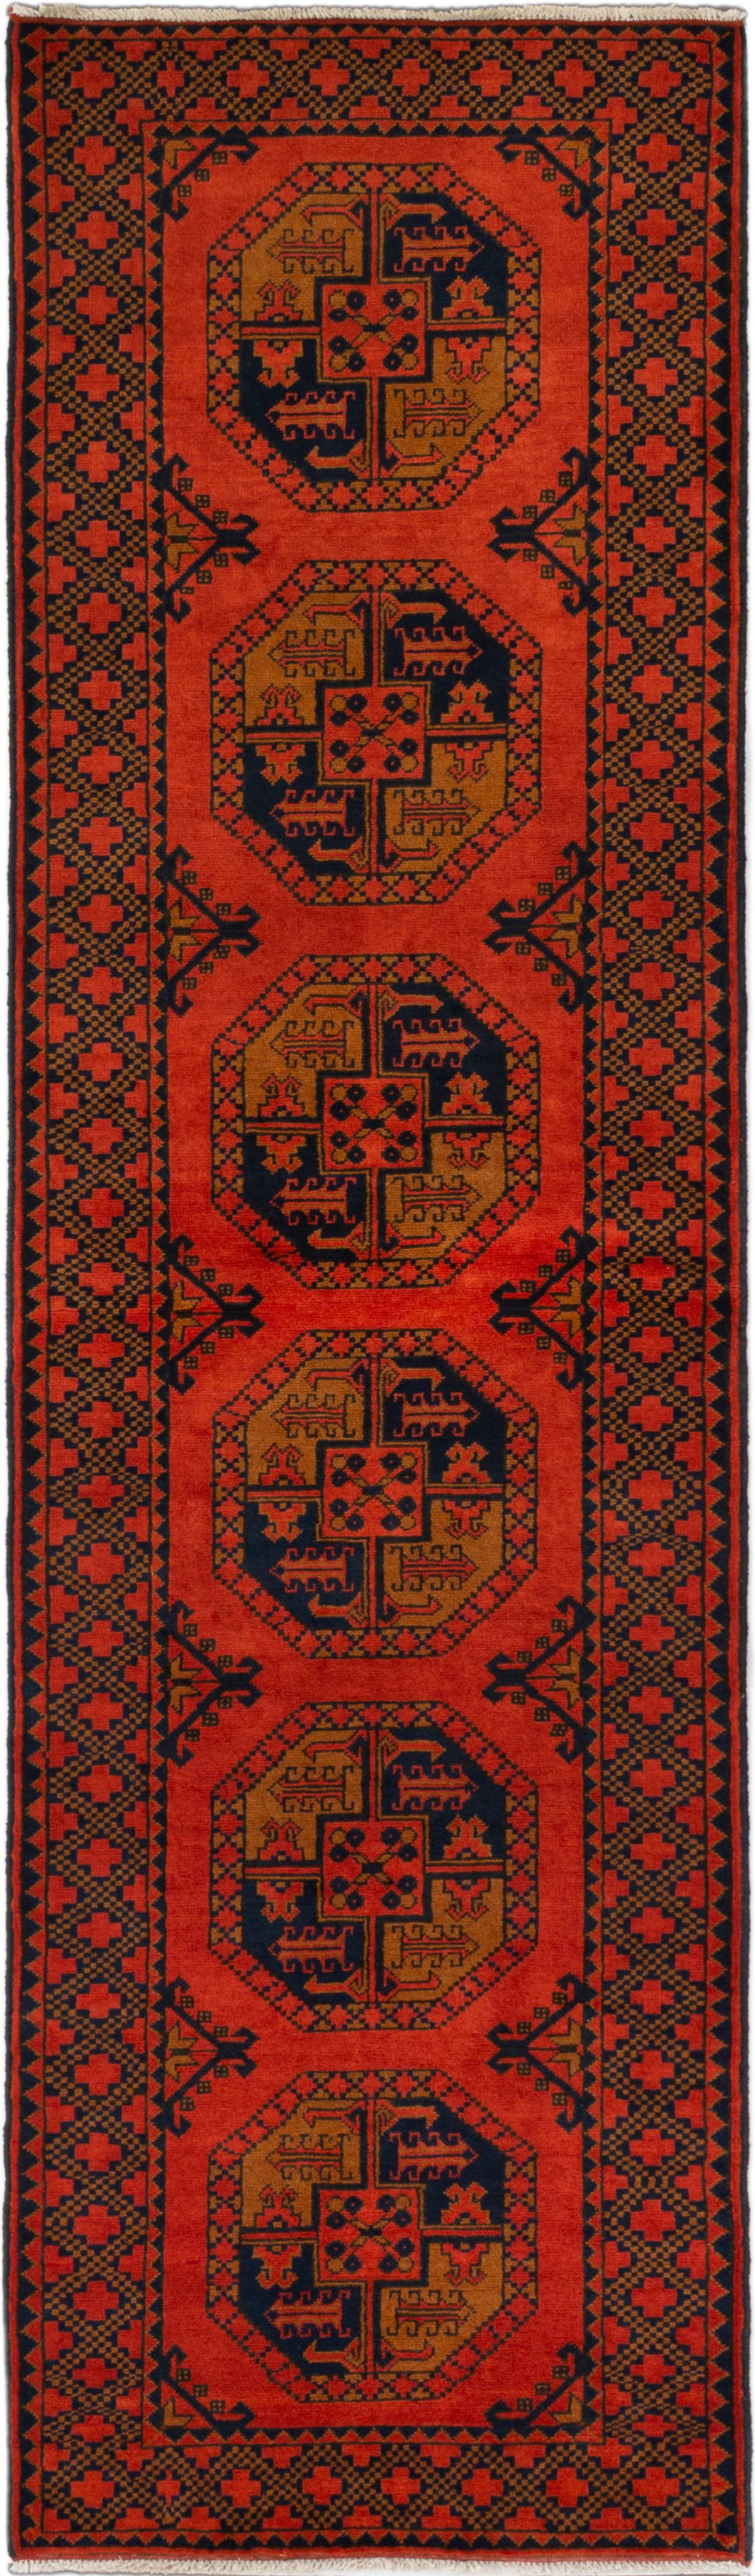 Hand-knotted Finest Kargahi Dark Copper Wool Rug 2'10" x 9'11"  Size: 2'10" x 9'11"  